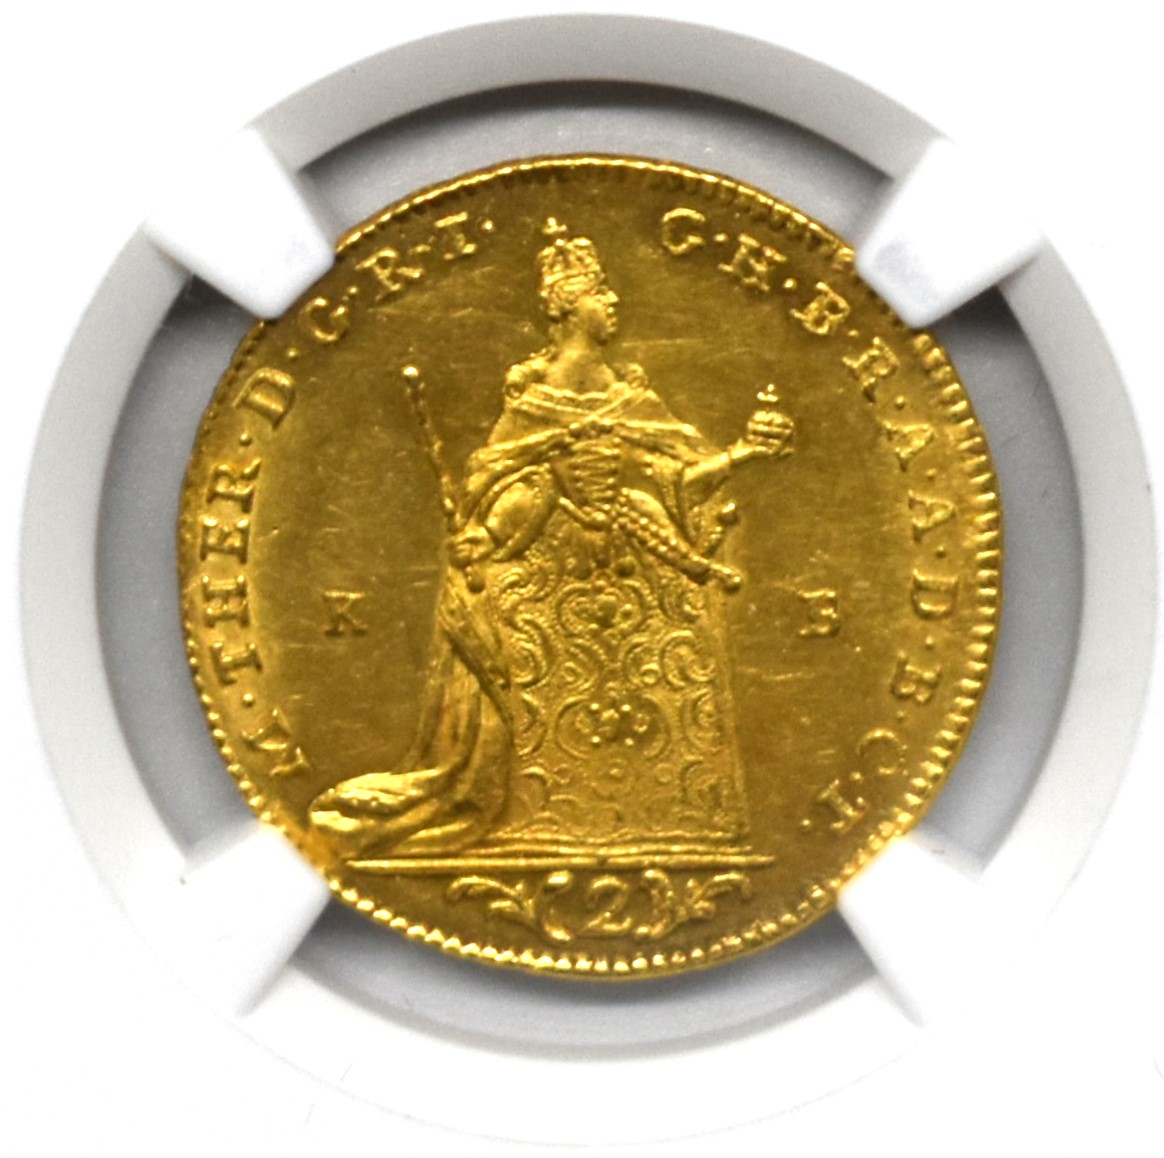 Sold】 1765年 ハンガリー マリア・テレジア 2ダカット金貨 MS61 NGC 